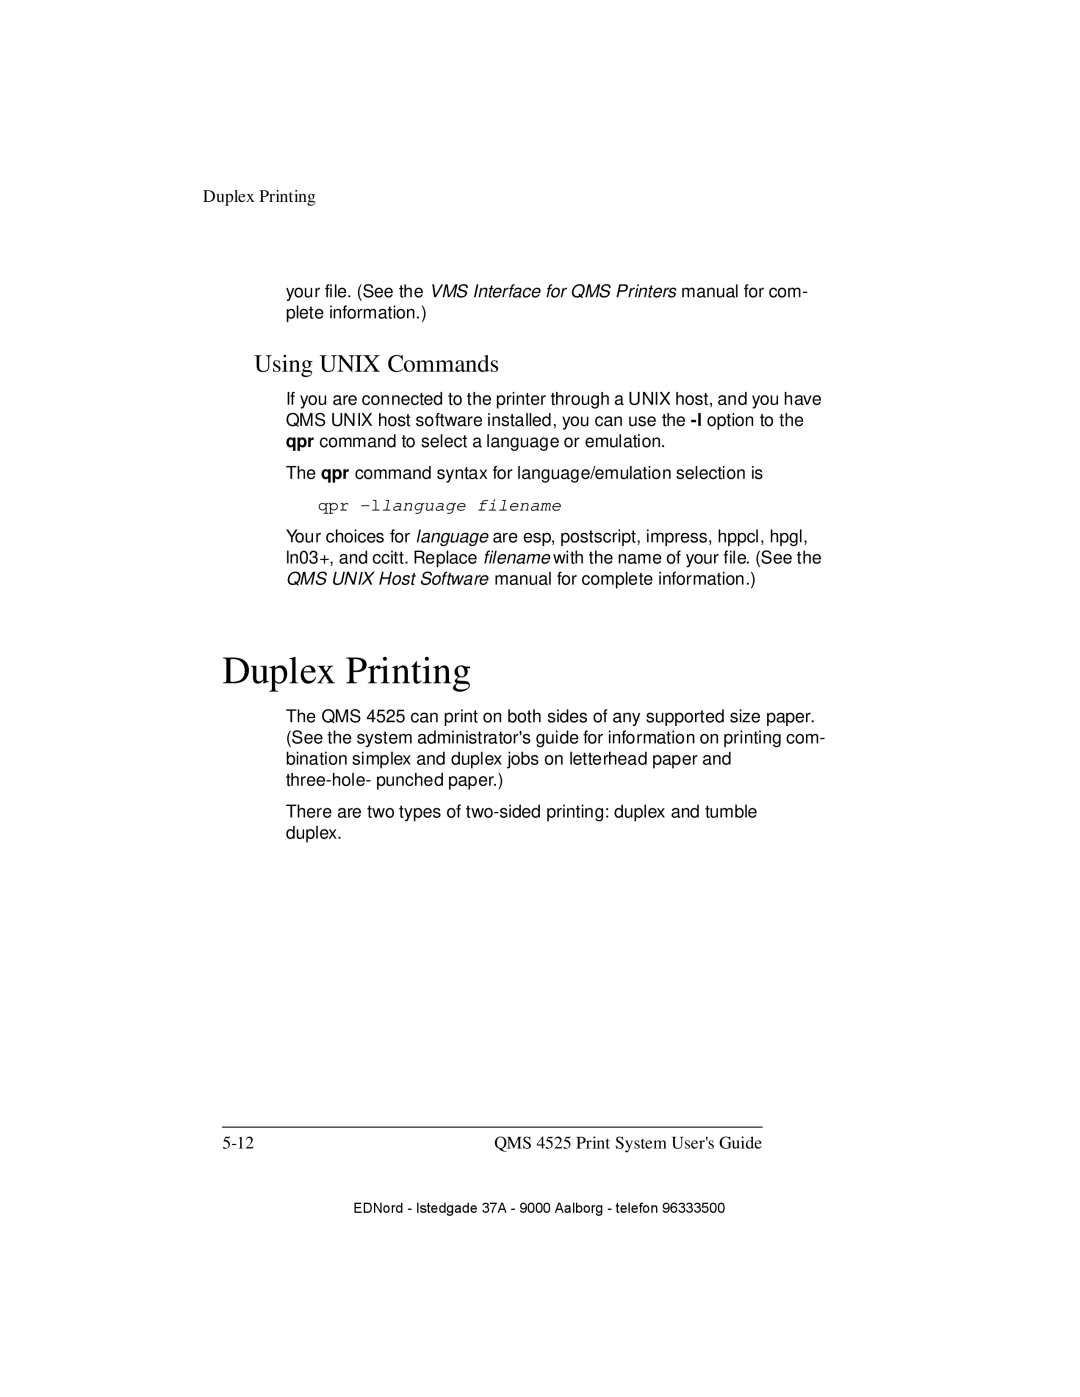 IBM QMS 4525 manual Duplex Printing, Using UNIX Commands, qpr -llanguage filename 